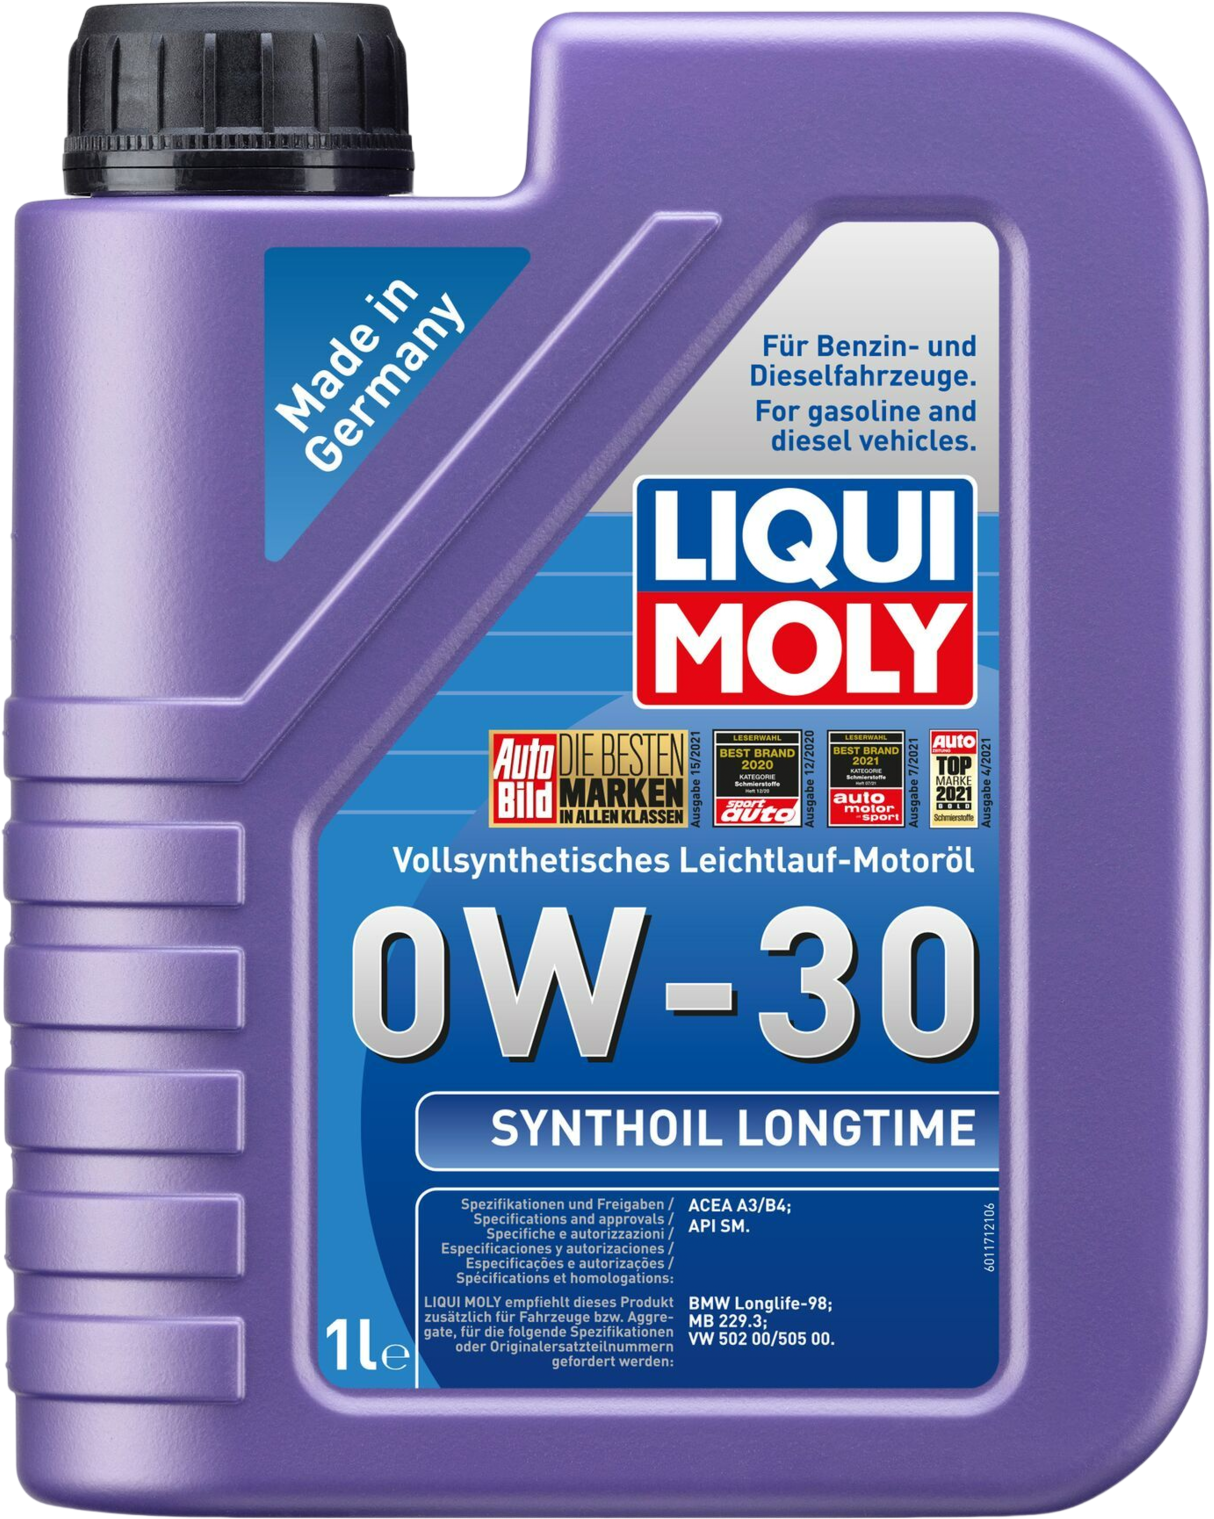 Liqui Moly Synthoil Longtime 0W-30, 6 x 1 lt detail 2